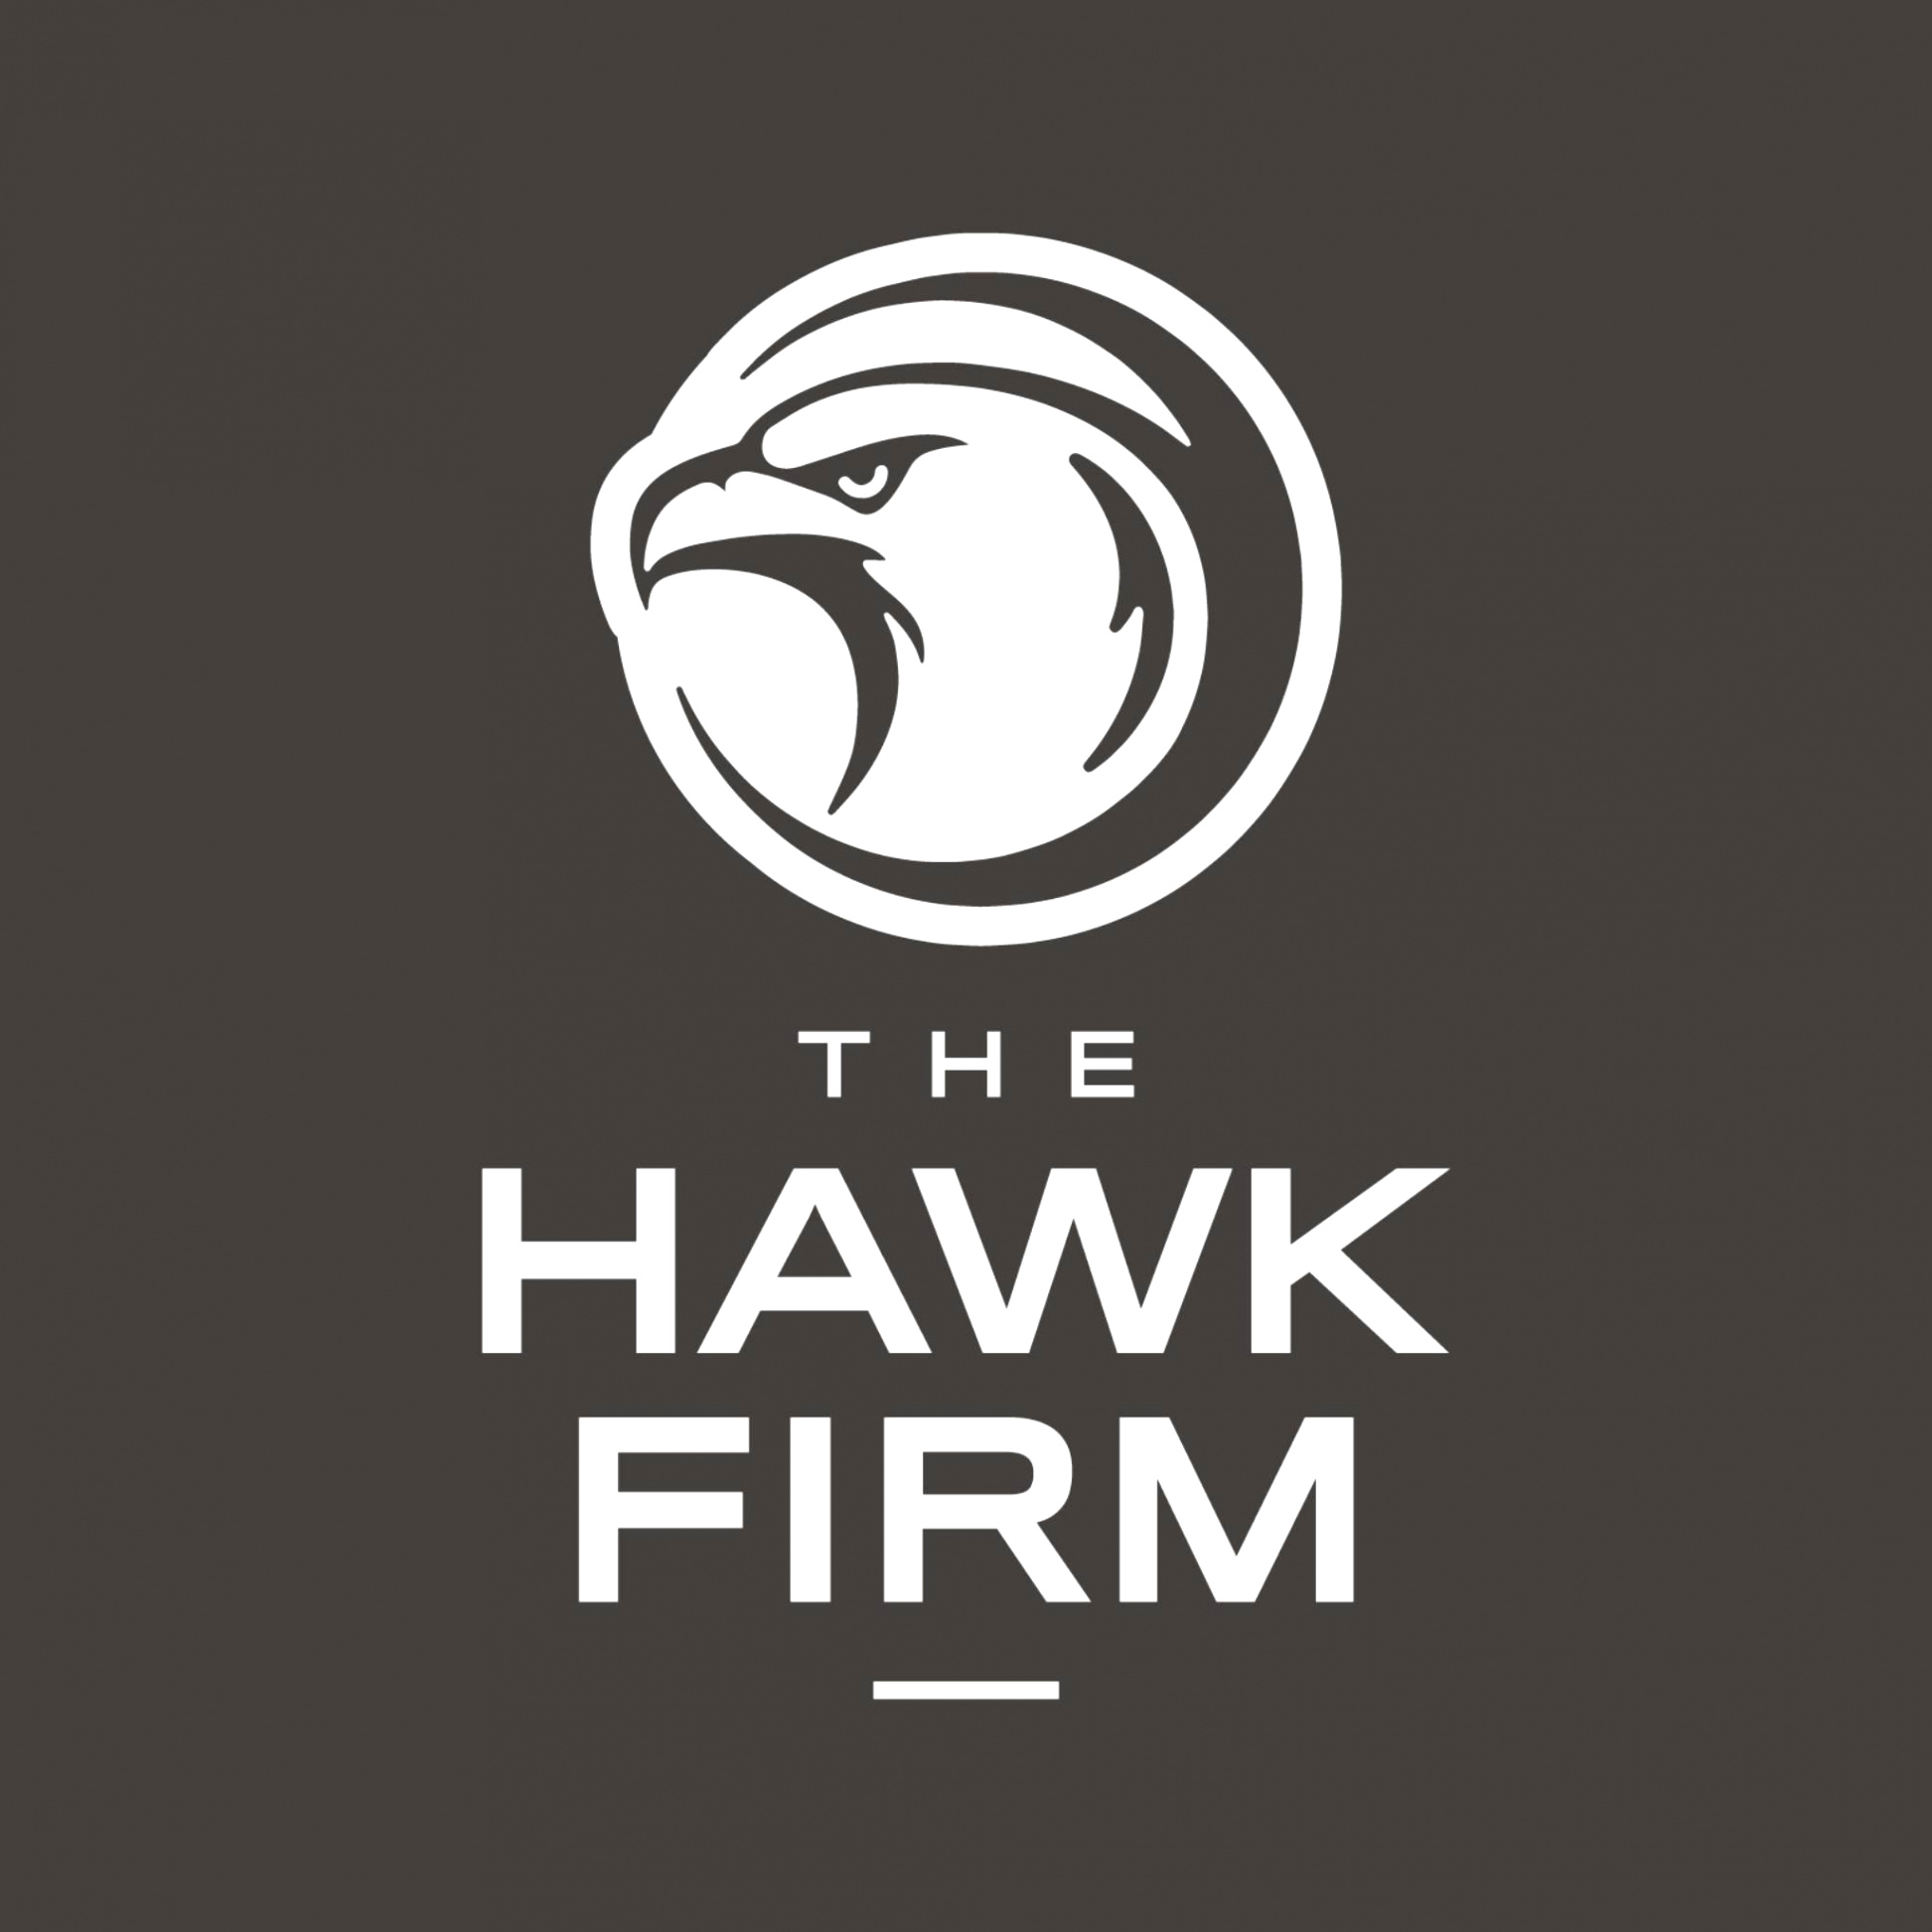 Personil Injury Lawyer In Telfair Ga Dans the Hawk Firm, 448 Telfair St, Augusta, Ga, Lawyers - Mapquest